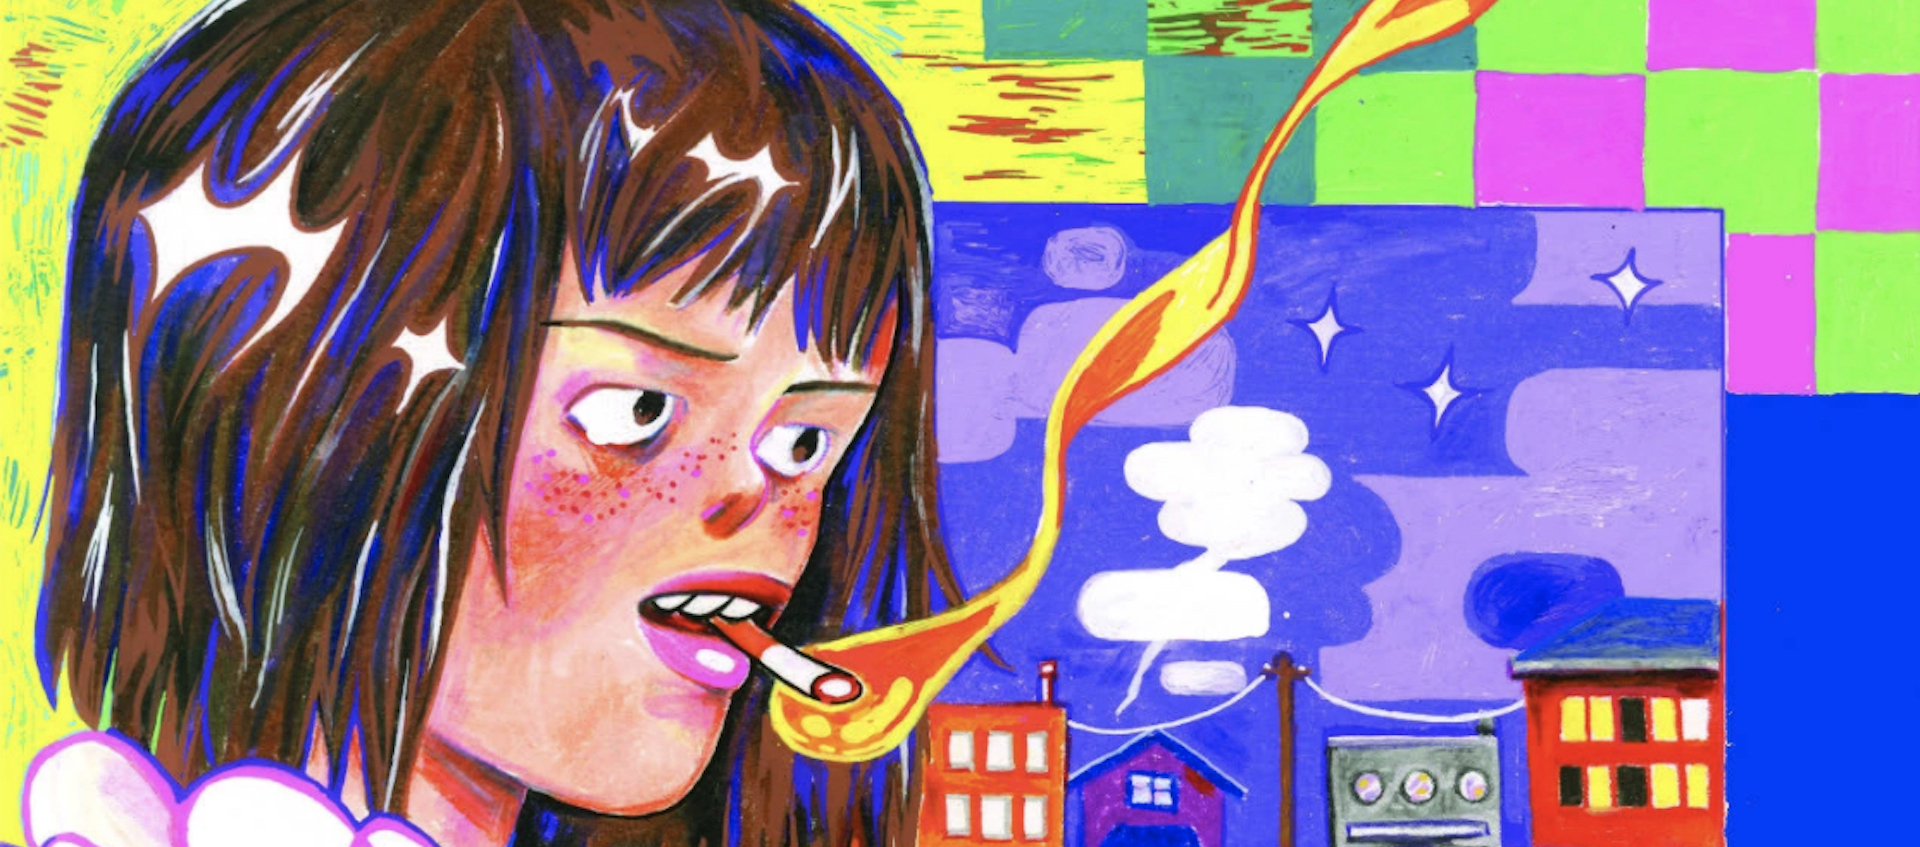 Cover detail from comic artist Caroline Cash's Girl in the World